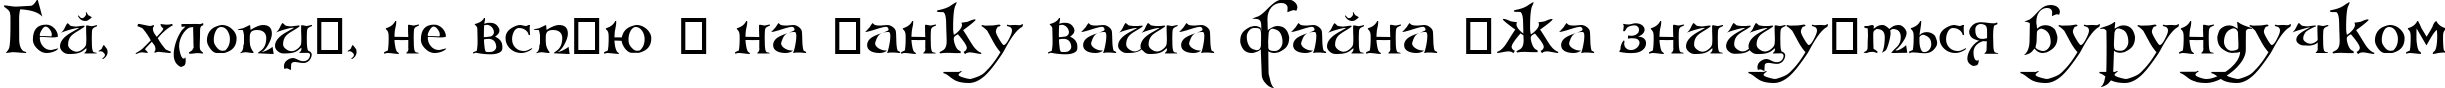 Пример написания шрифтом Arlekino текста на украинском